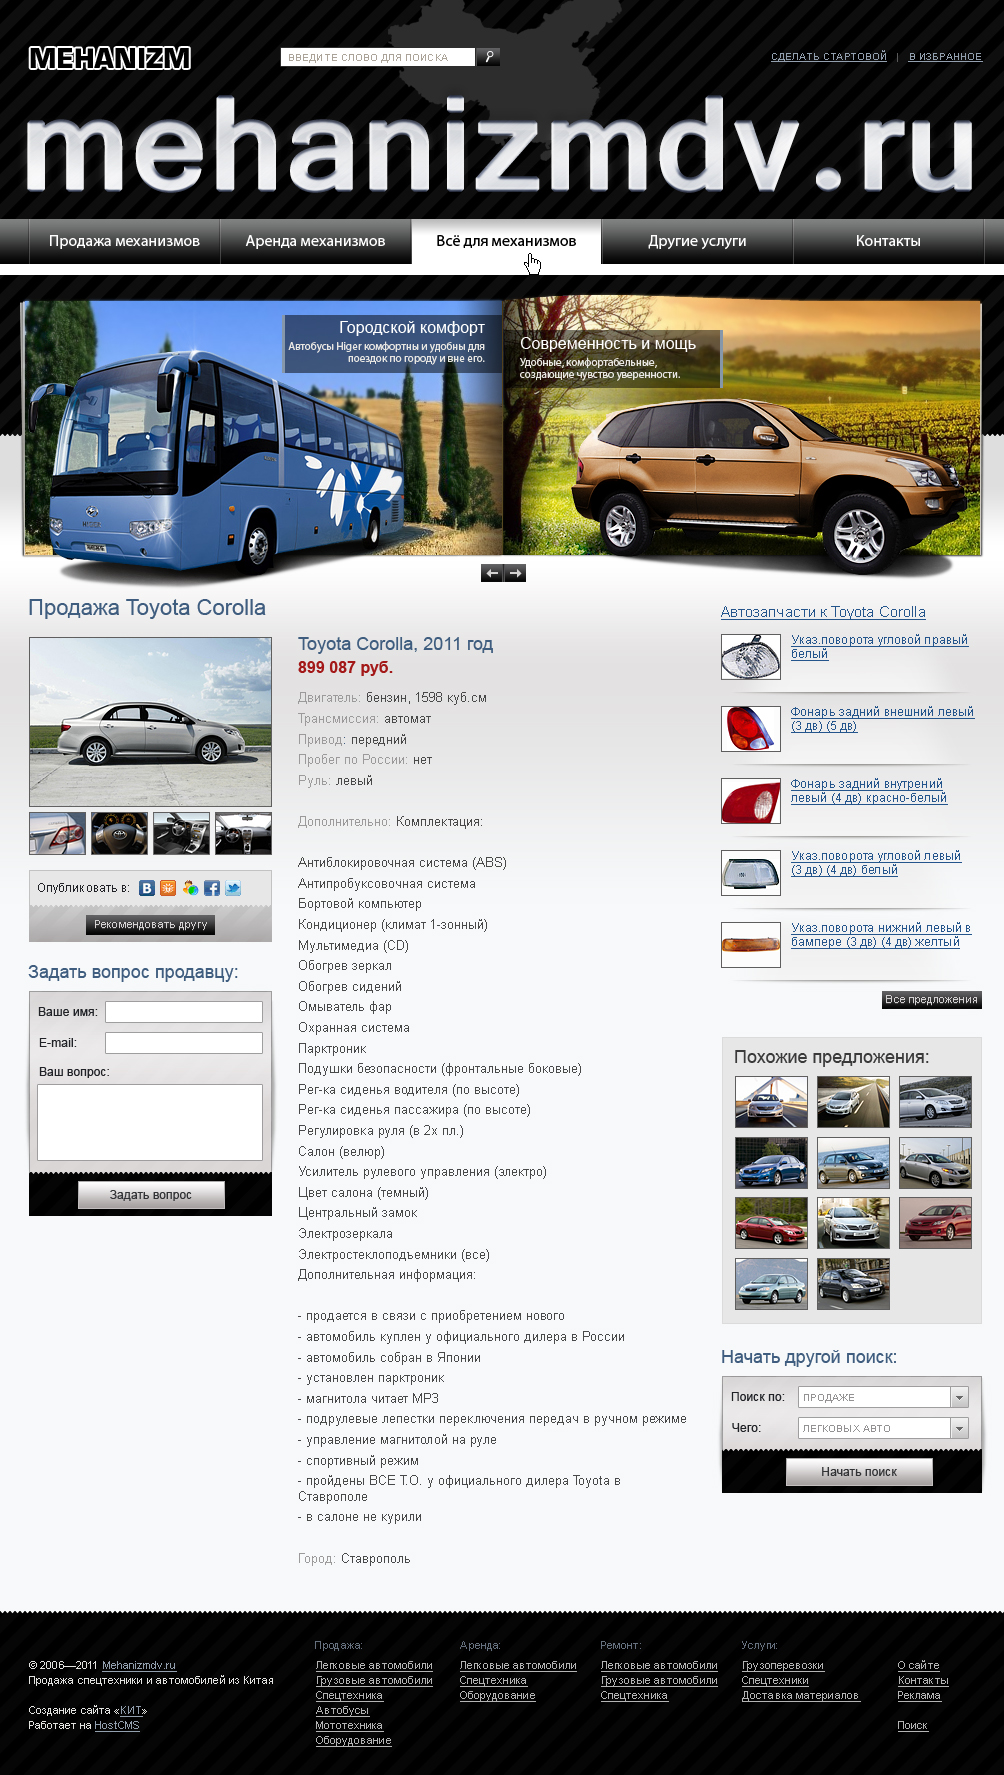 Сайт mehanizmdv.ru, г.Хабаровск (внутренняя страница)